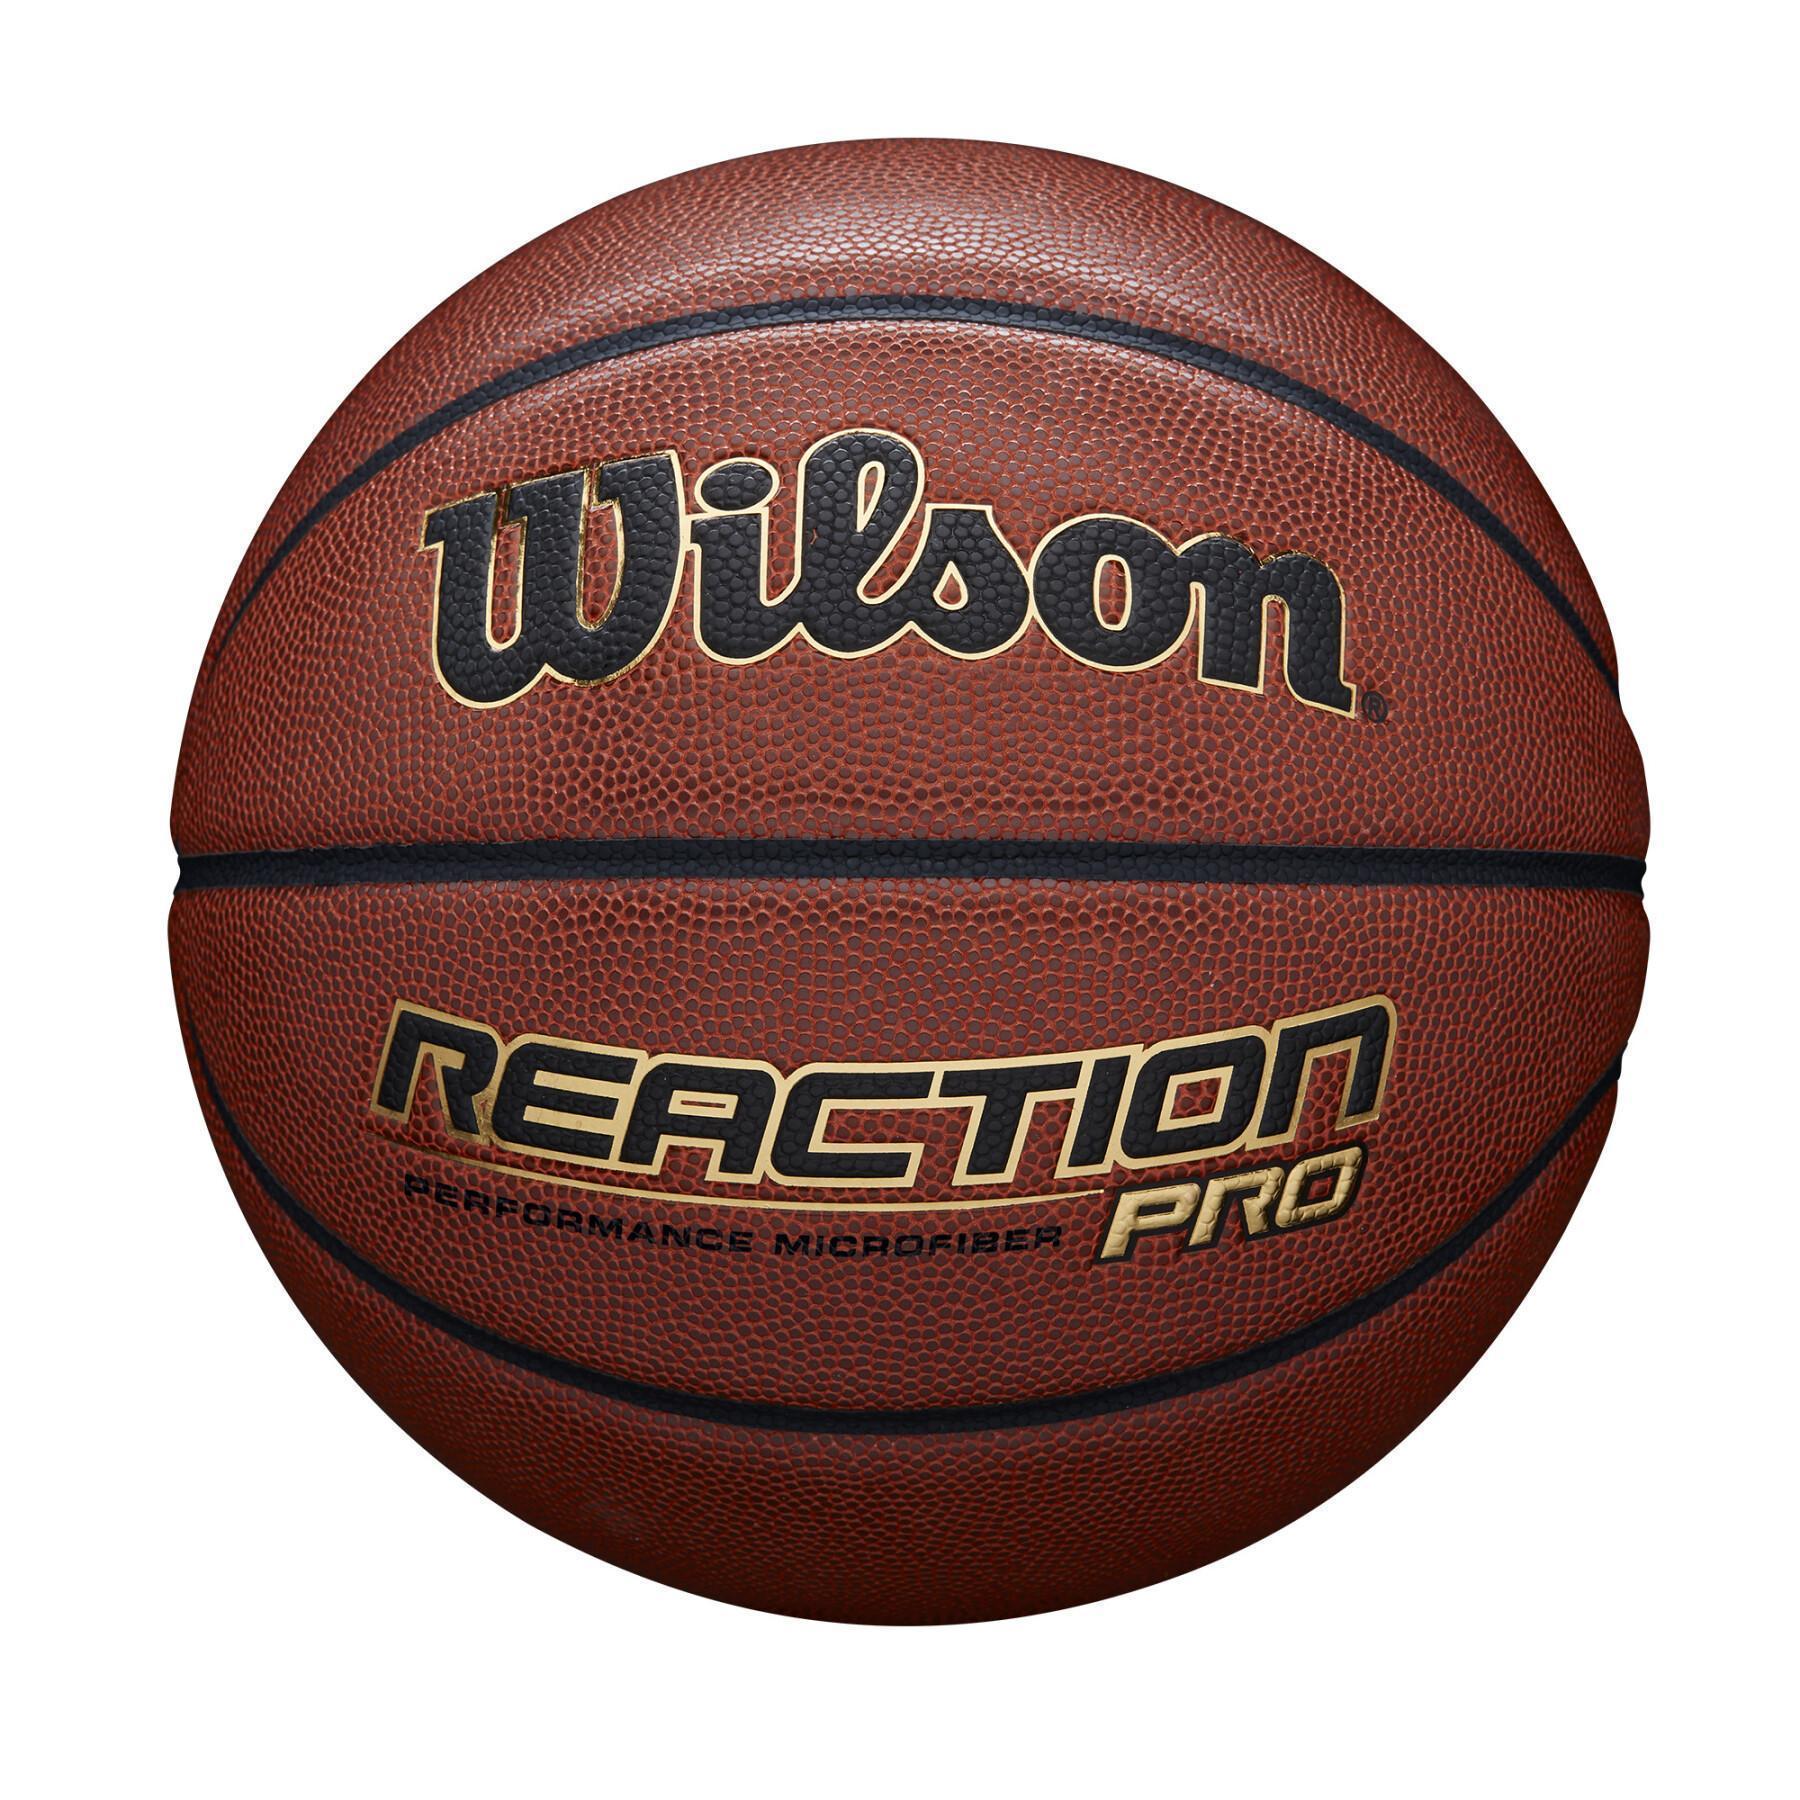 Ball reaction pro Wilson